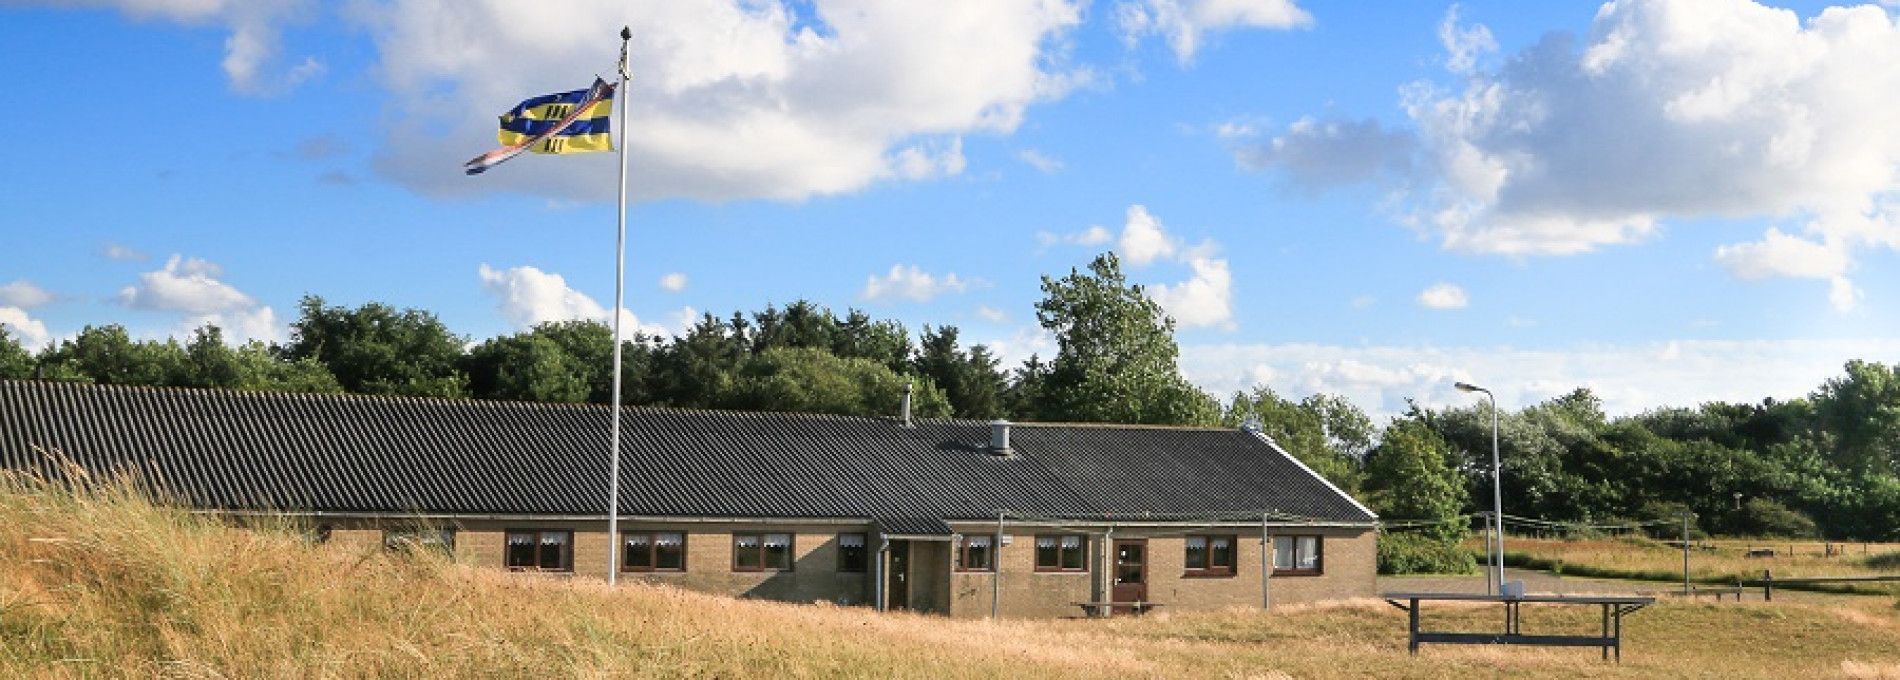 Kamphuis De Vallei - VVV Ameland